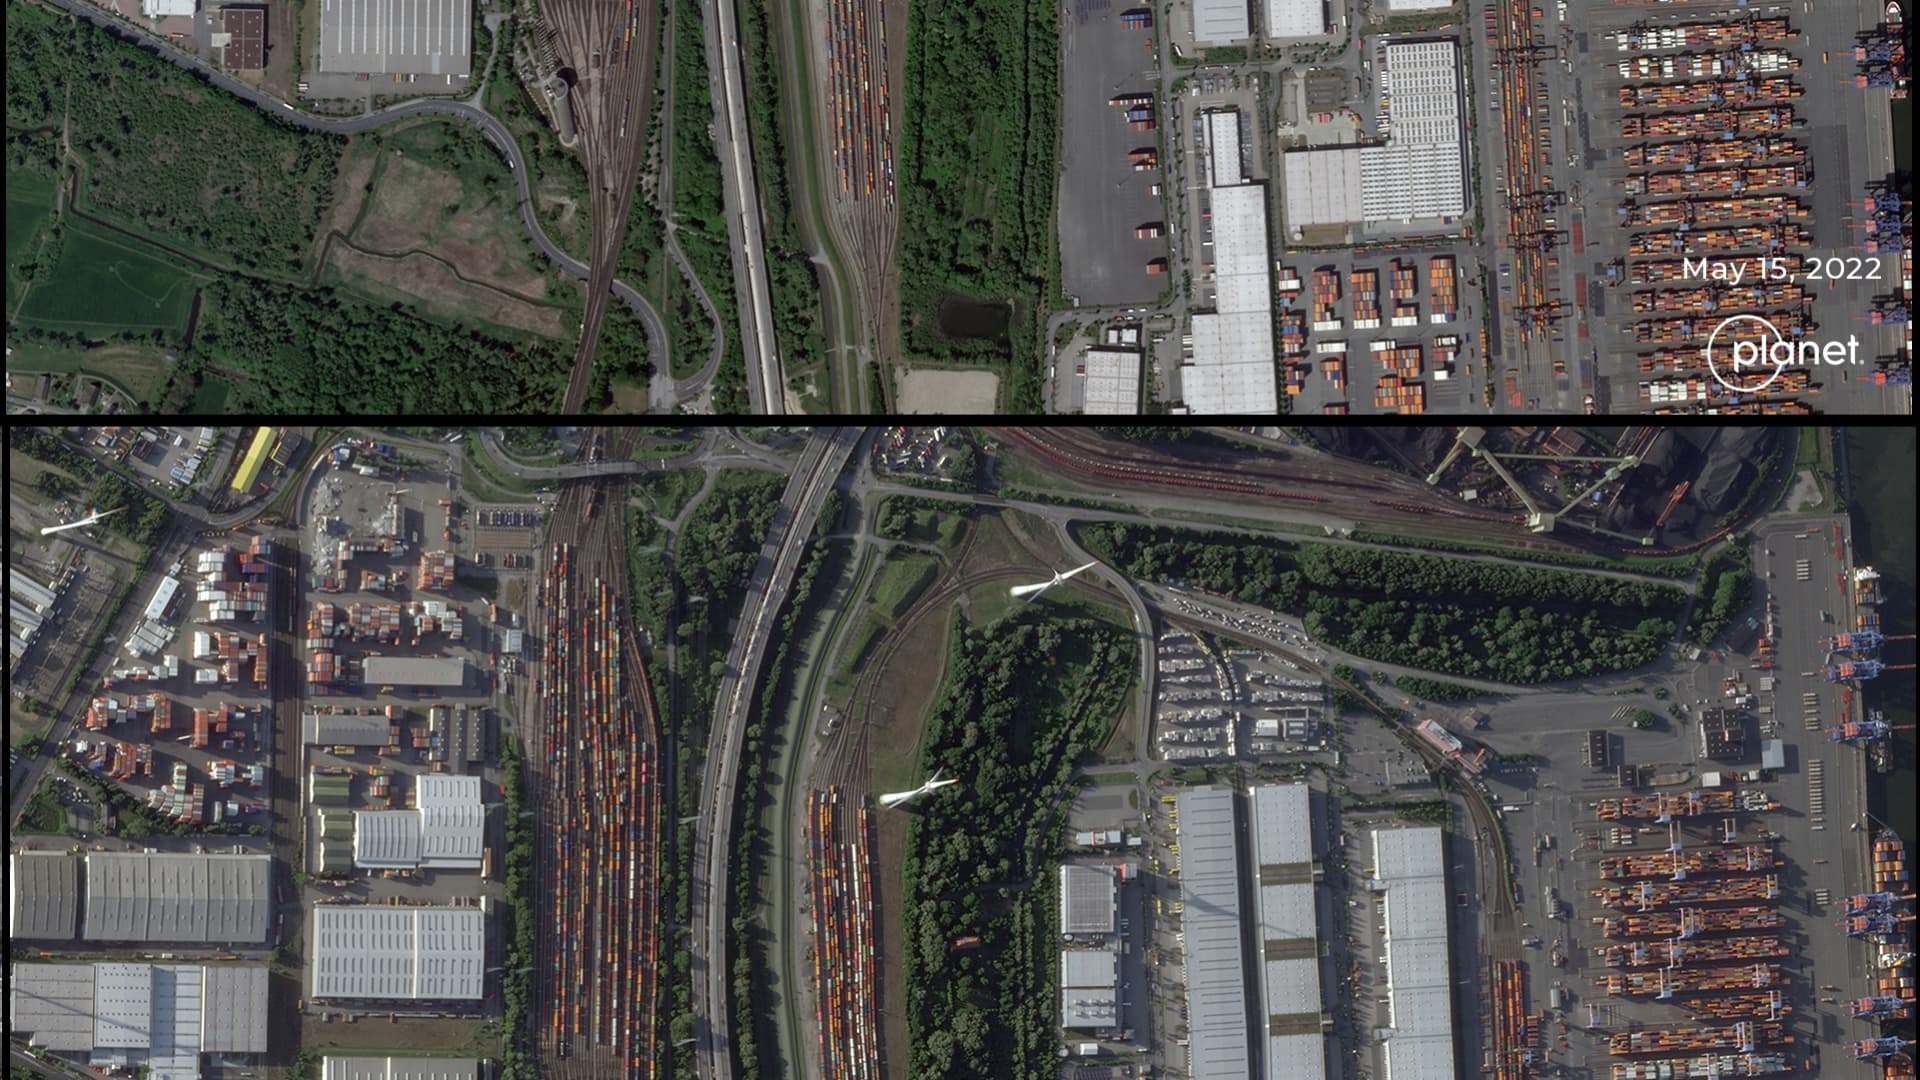 Hamburg rail terminal comparisons